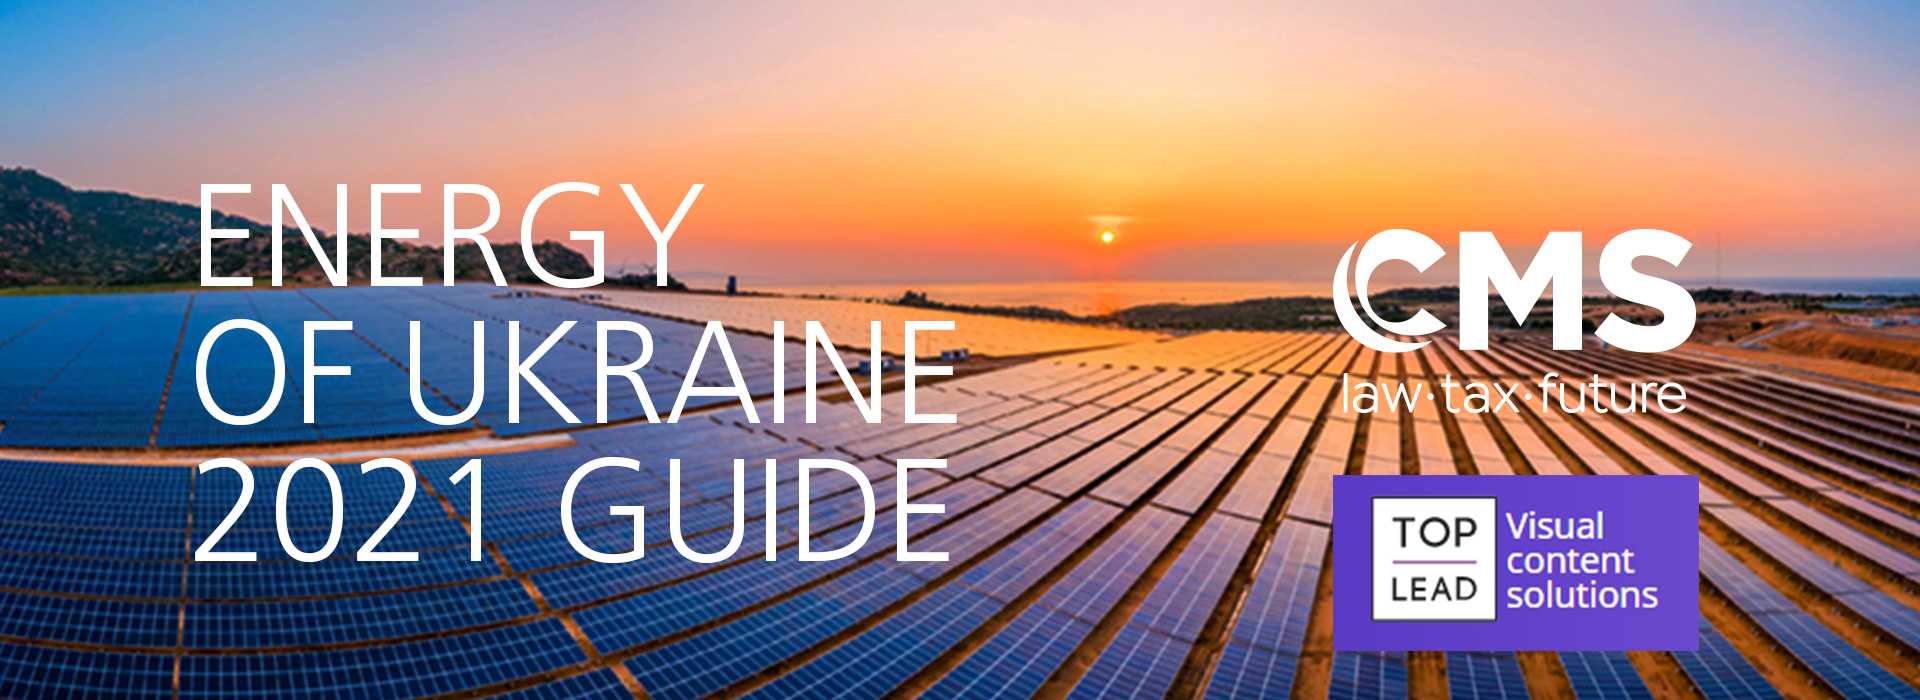 Energy of Ukraine 2021 Guide